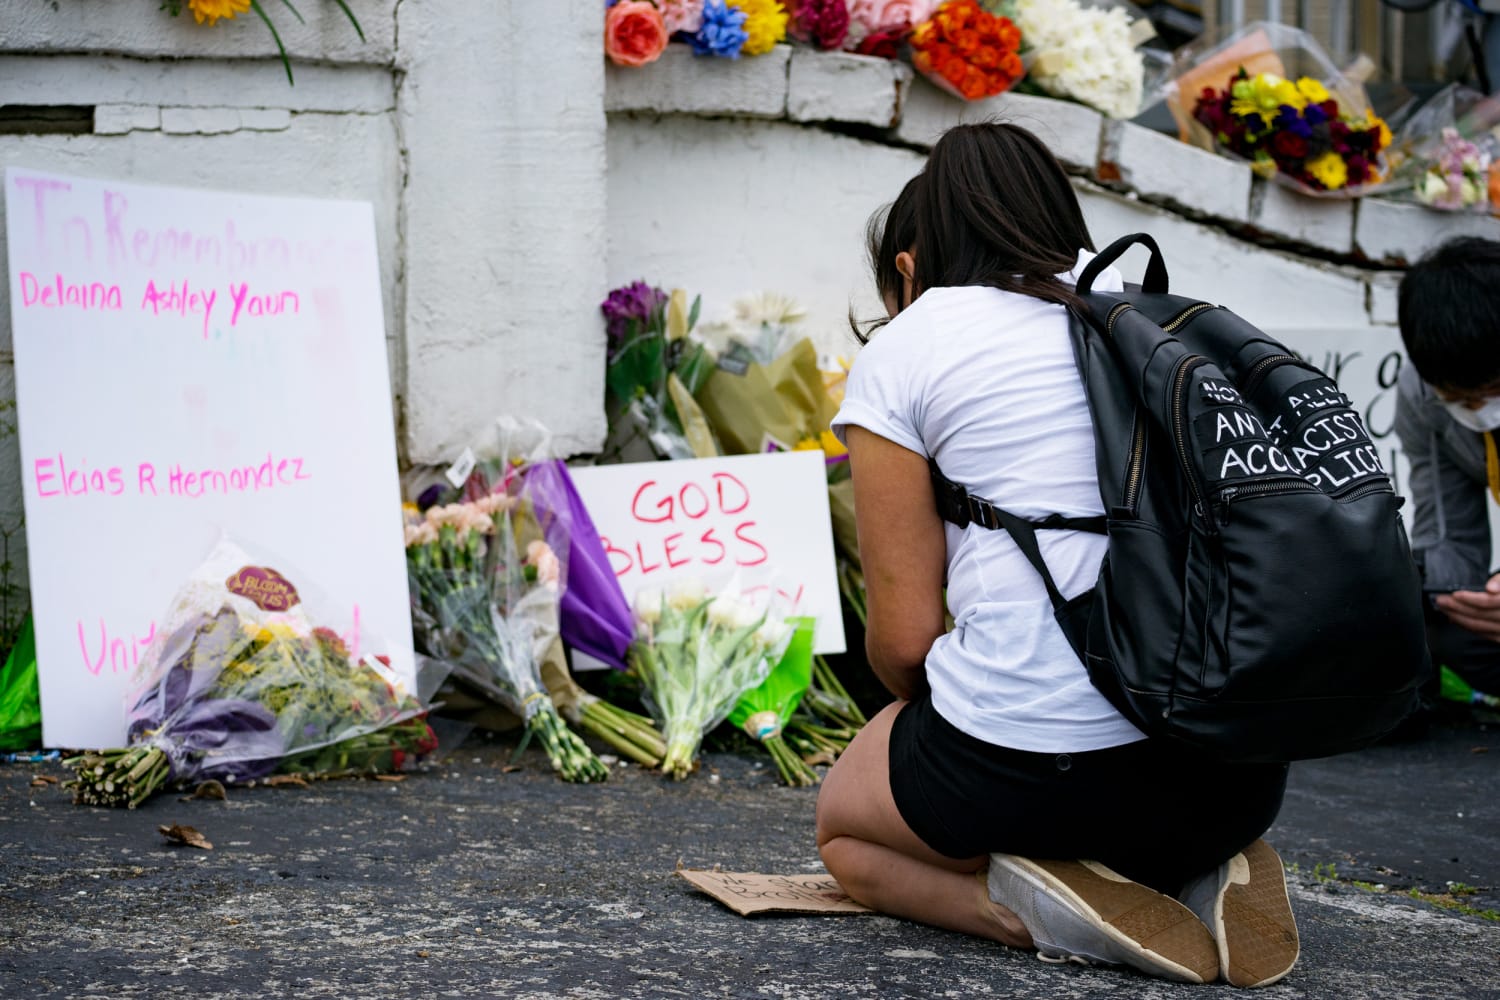 Biden commemorates the anniversary of Atlanta deadly spa shootings